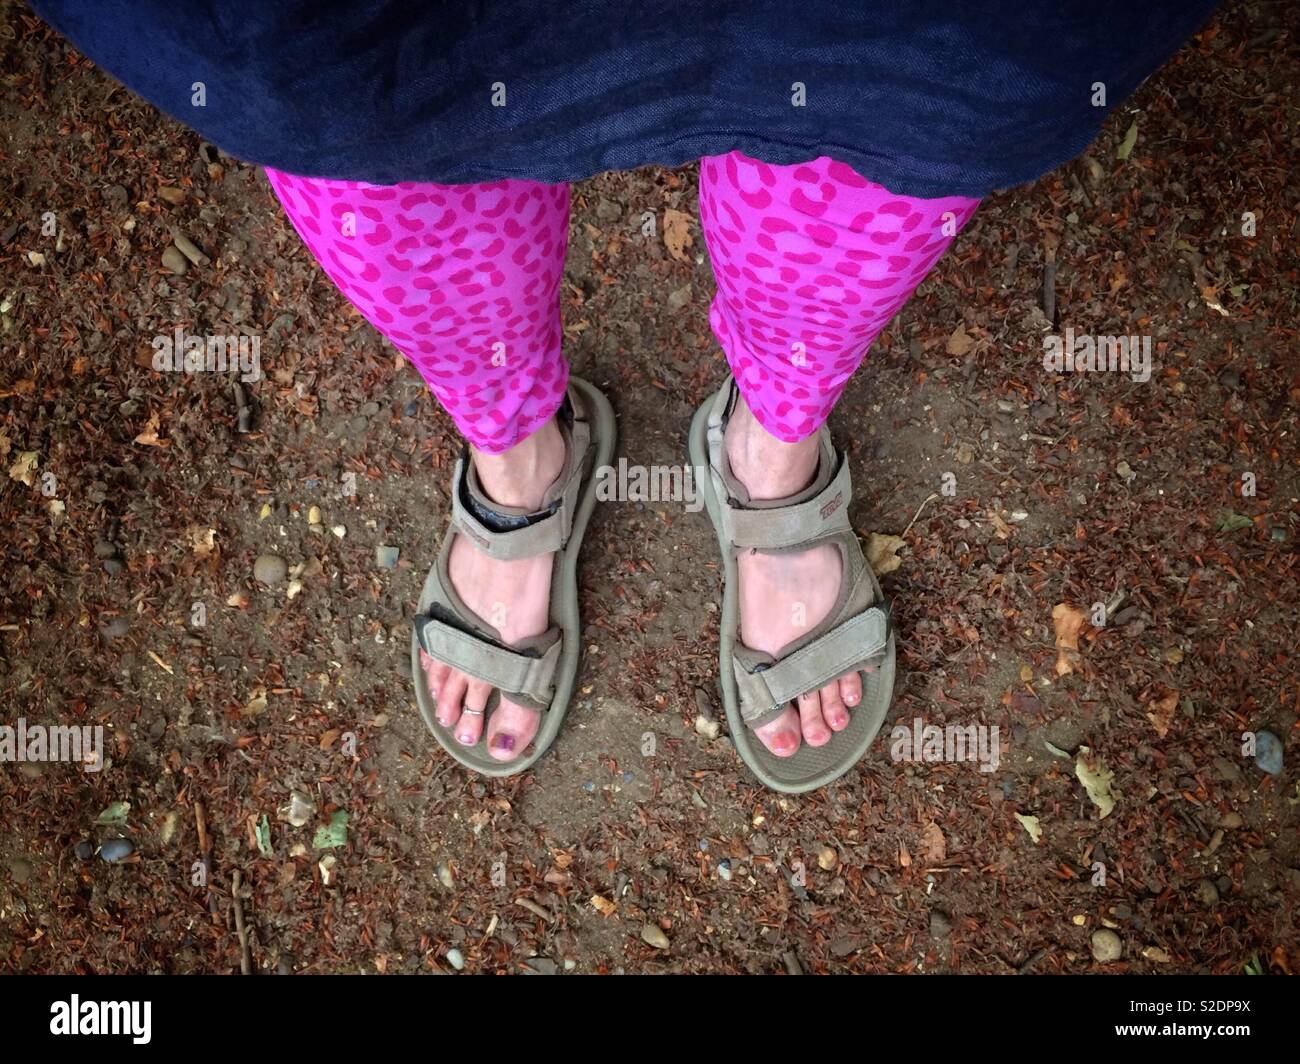 pink hiking sandals